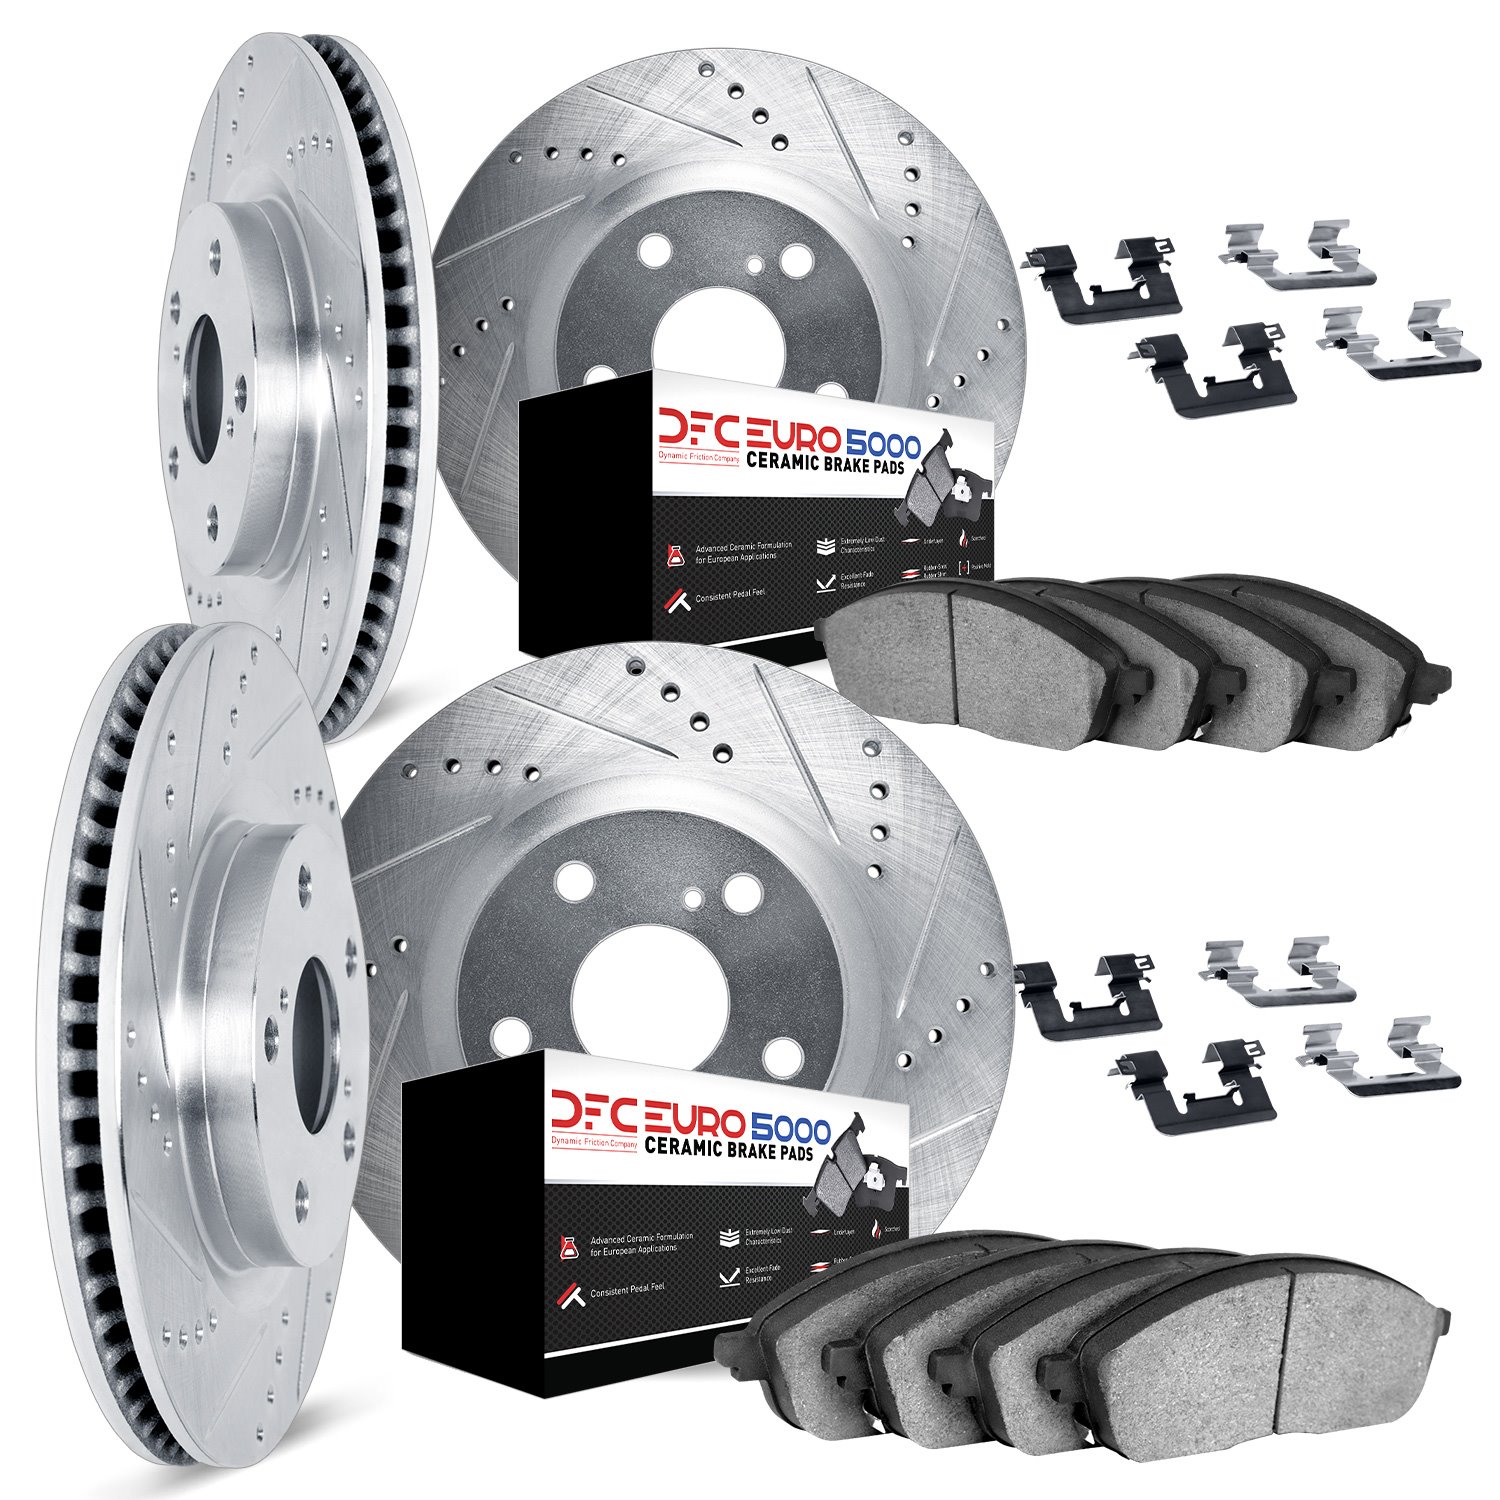 7614-20008 Drilled/Slotted Brake Rotors w/5000 Euro Ceramic Brake Pads Kit & Hardware [Silver], 2017-2019 Multiple Makes/Models,